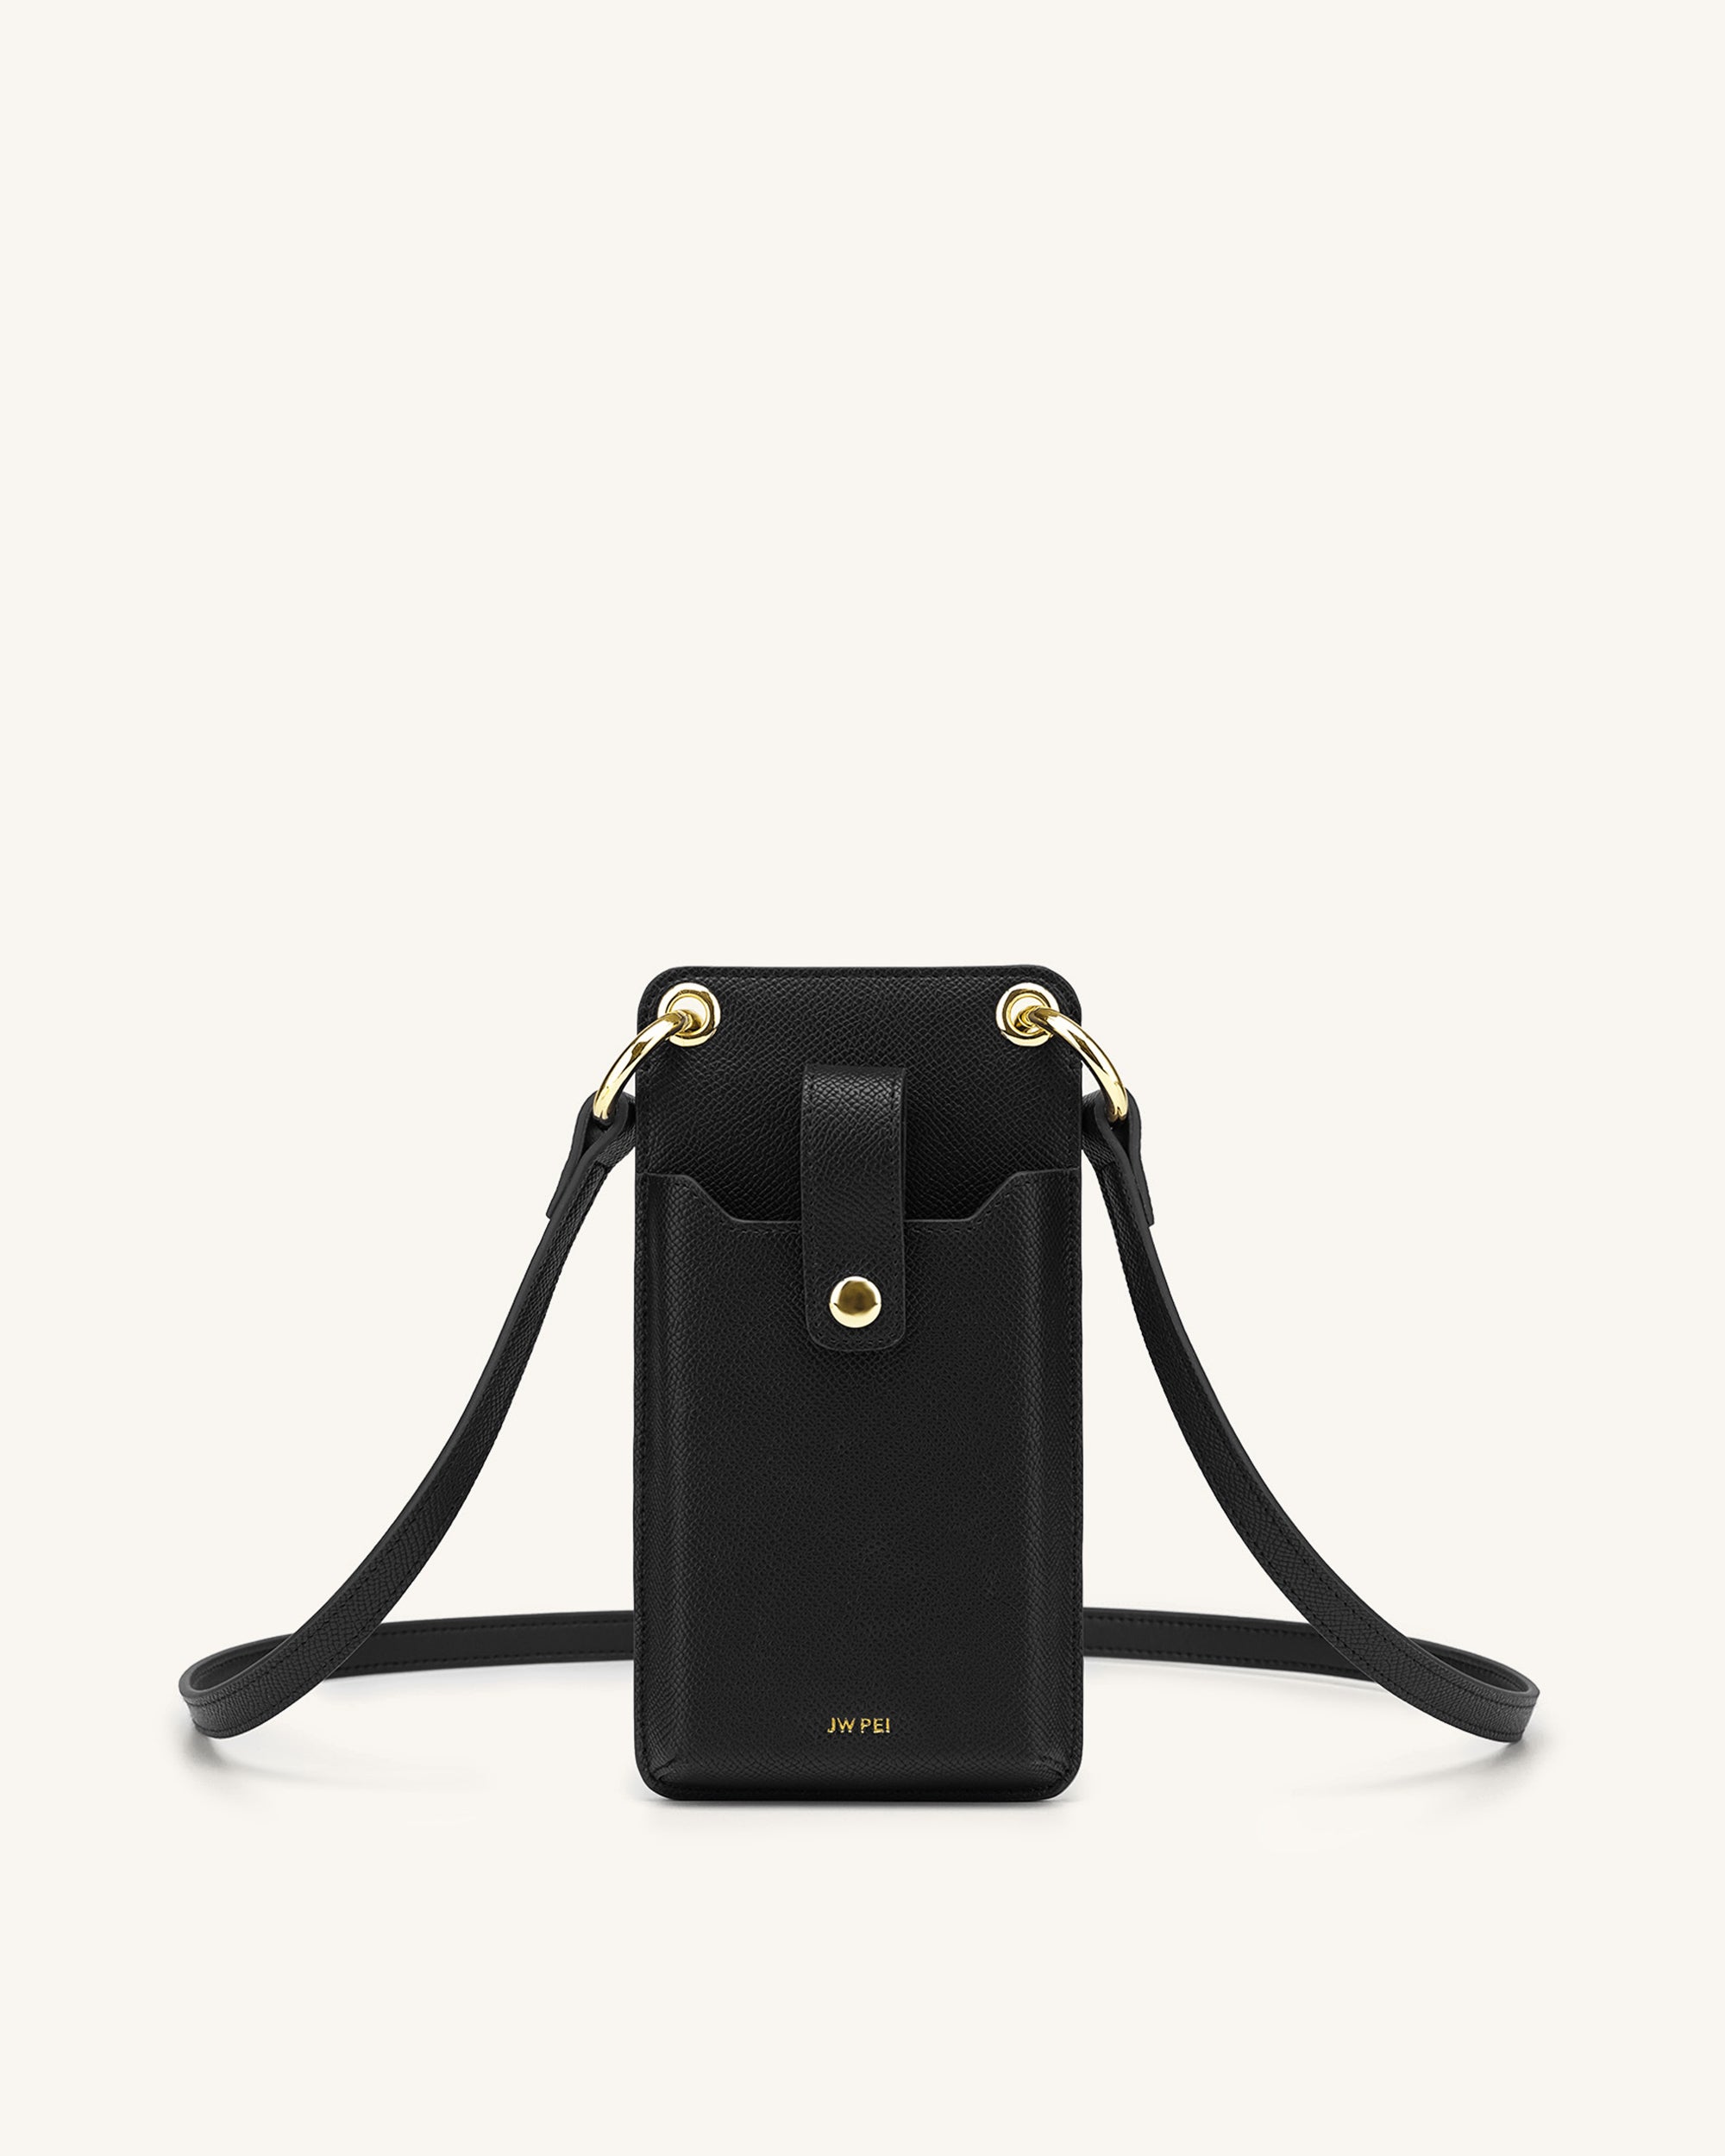 Kiq Universal Cellphone Leather Pouches - 4.5 (5.0 x 2.5 x 0.50) - Black